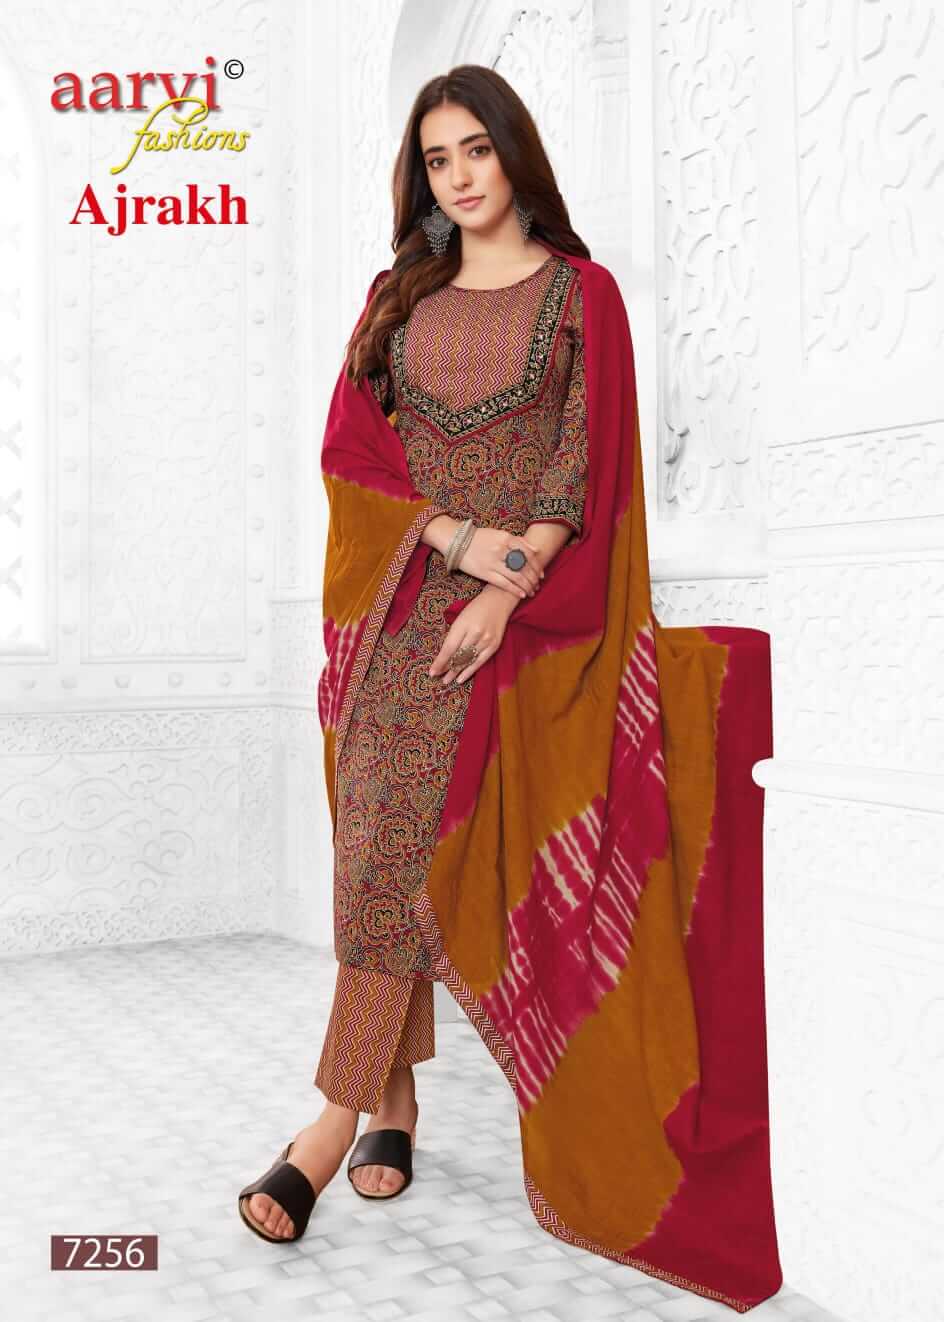 Aarvi Fashions Ajrakh Vol 2 Cotton Salwar Kameez Catalog collection 12